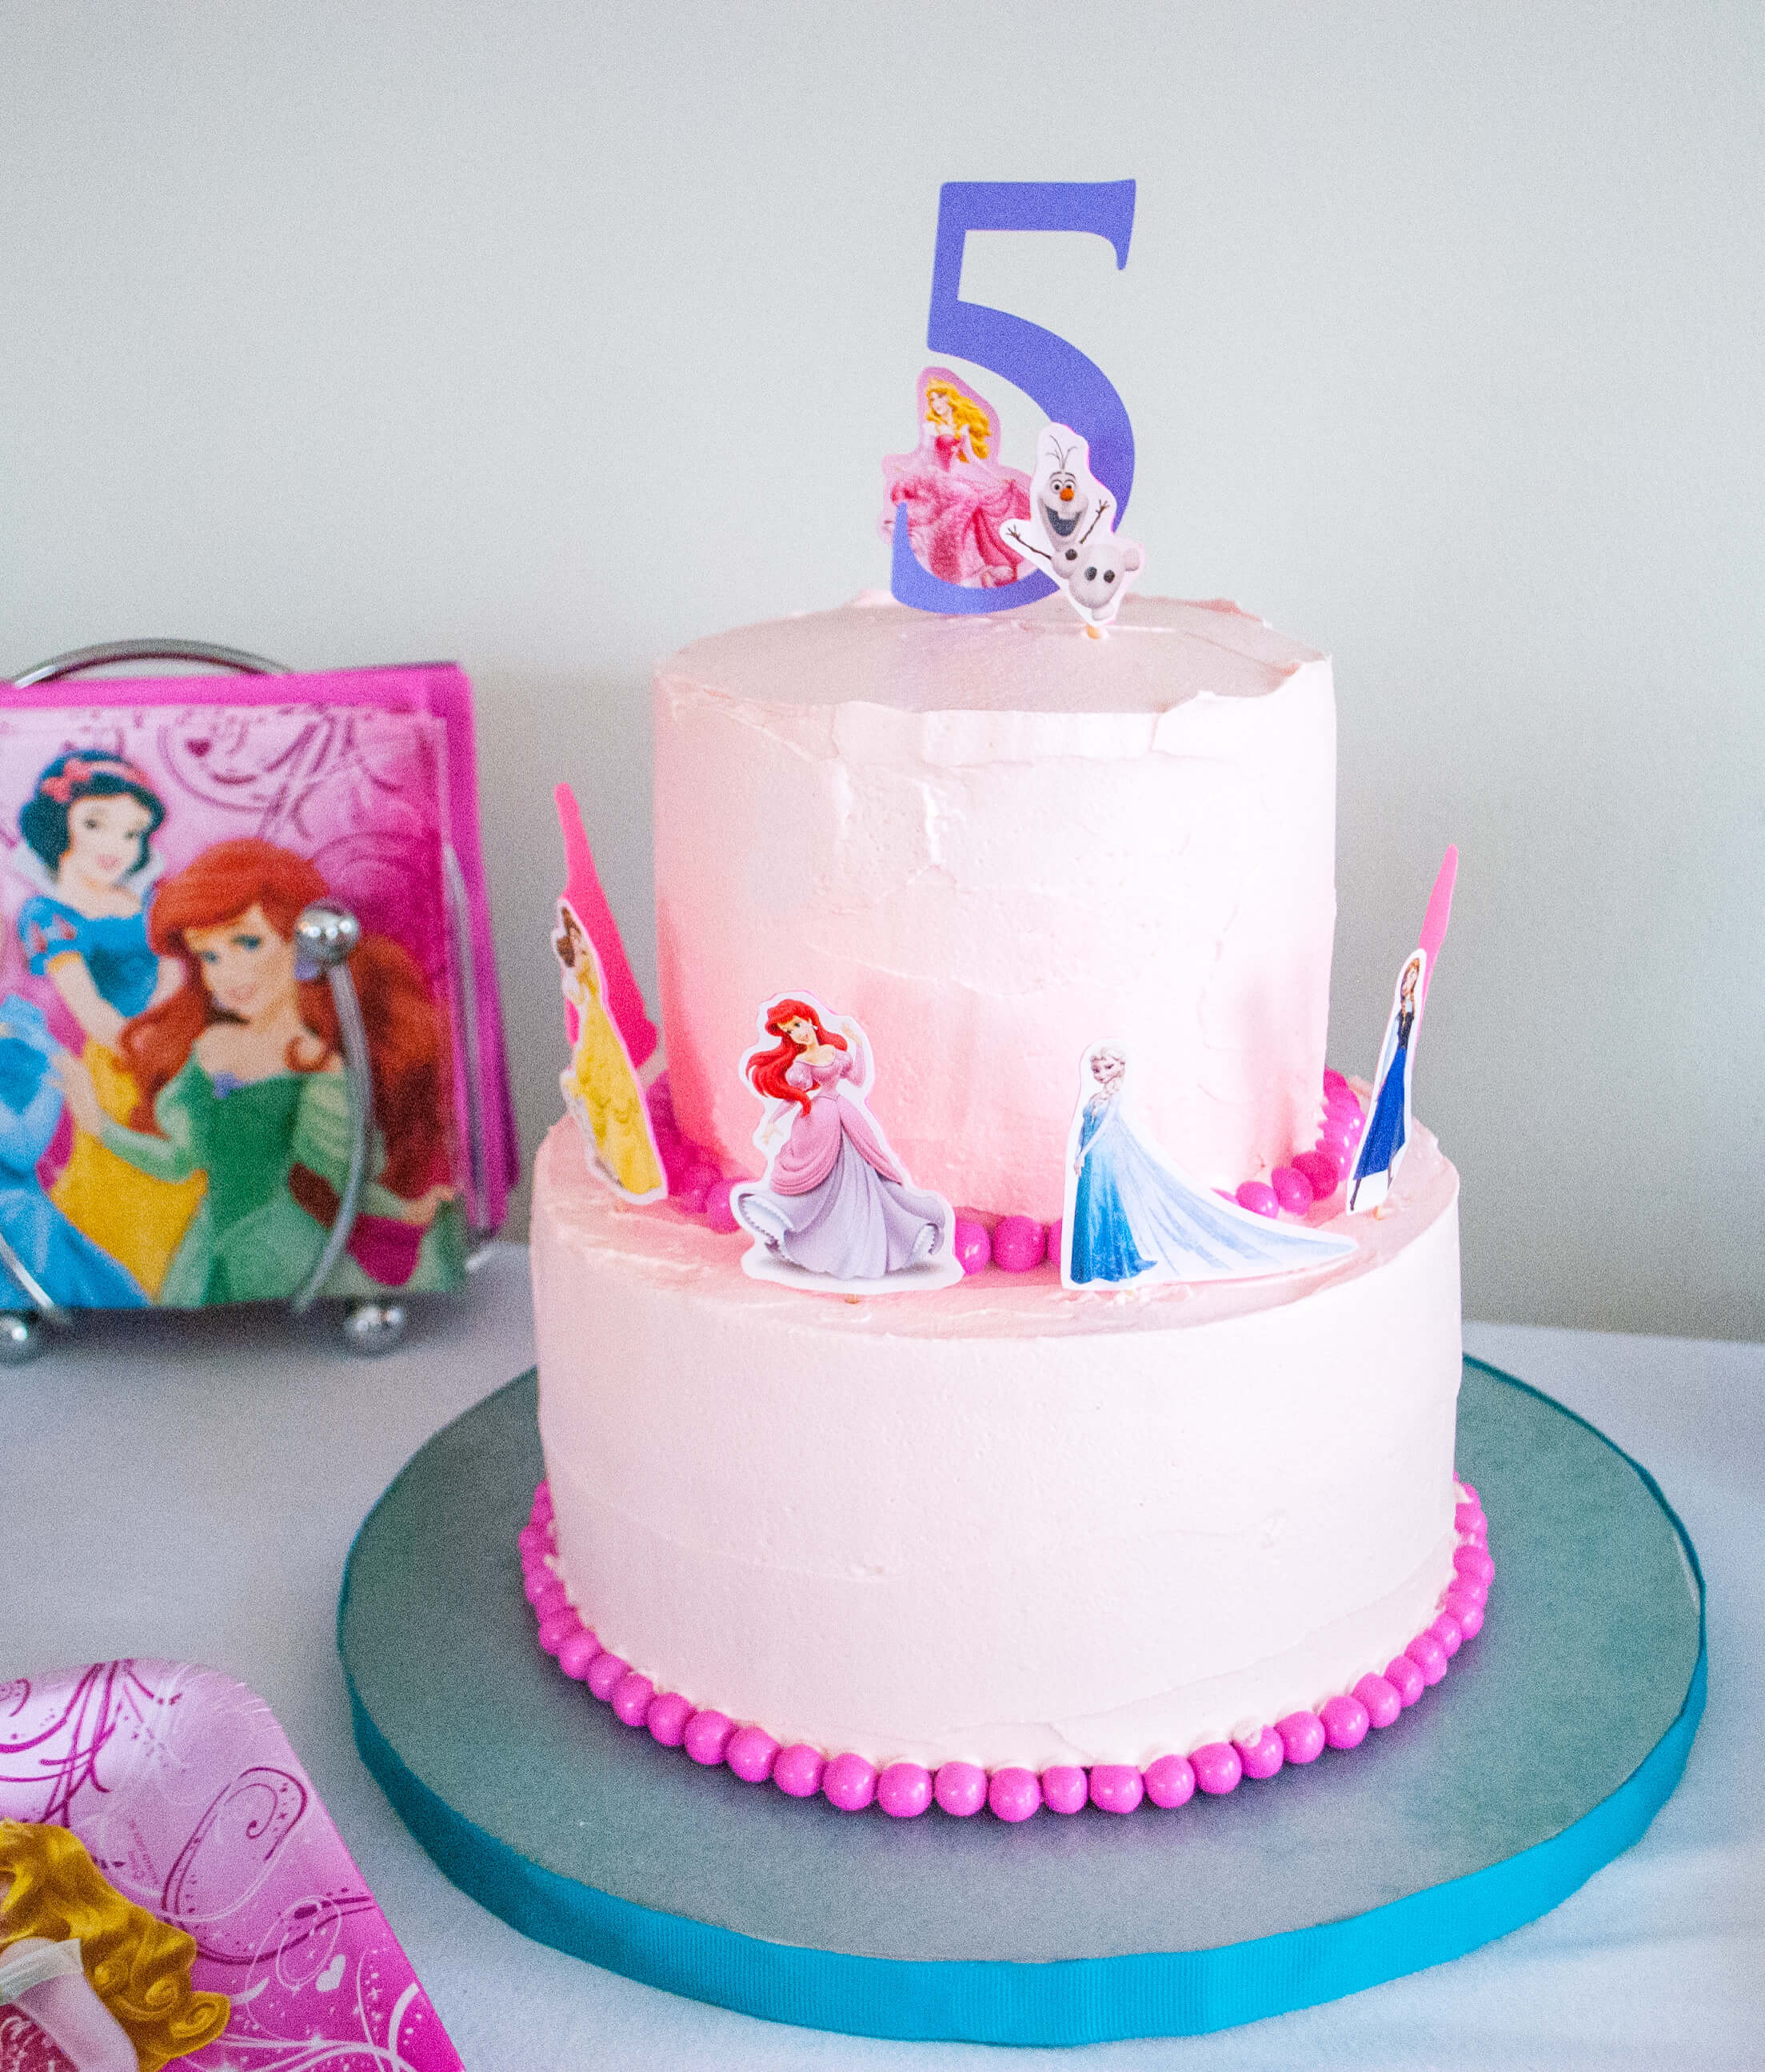 Best ideas about Disney Princess Birthday Cake
. Save or Pin Make an Easy Disney Princess Birthday Cake Using Stickers Now.